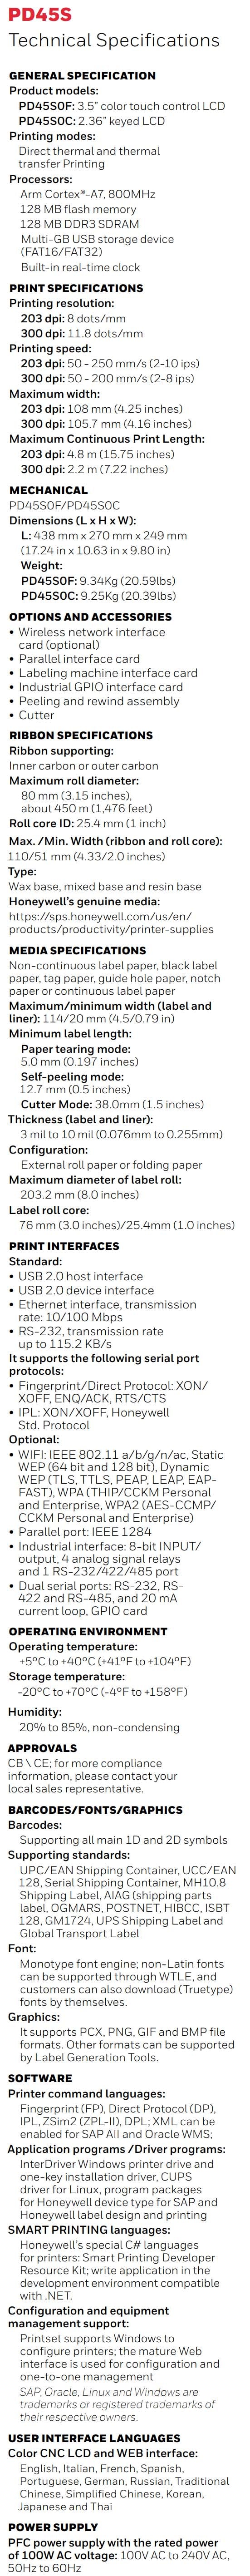 Honeywell PD45S Industrial Printer datasheet